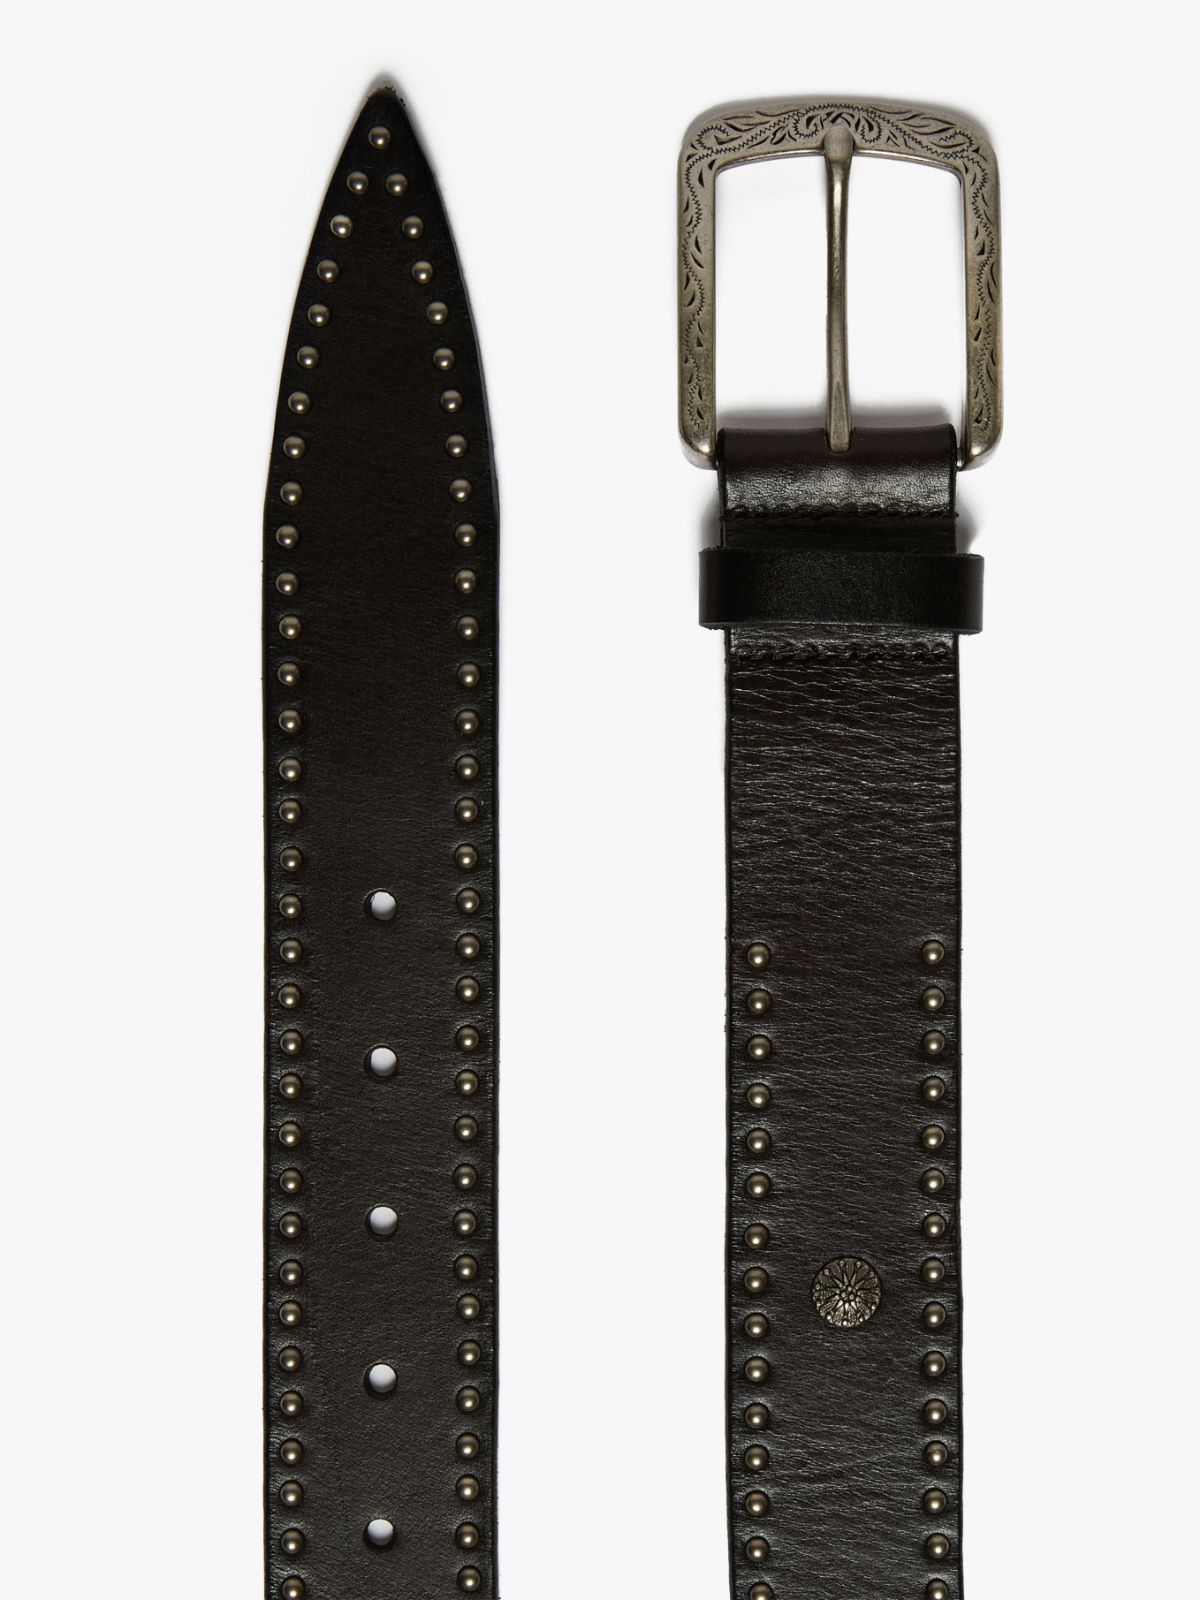 Studded leather belt - DARK BROWN - Weekend Max Mara - 2